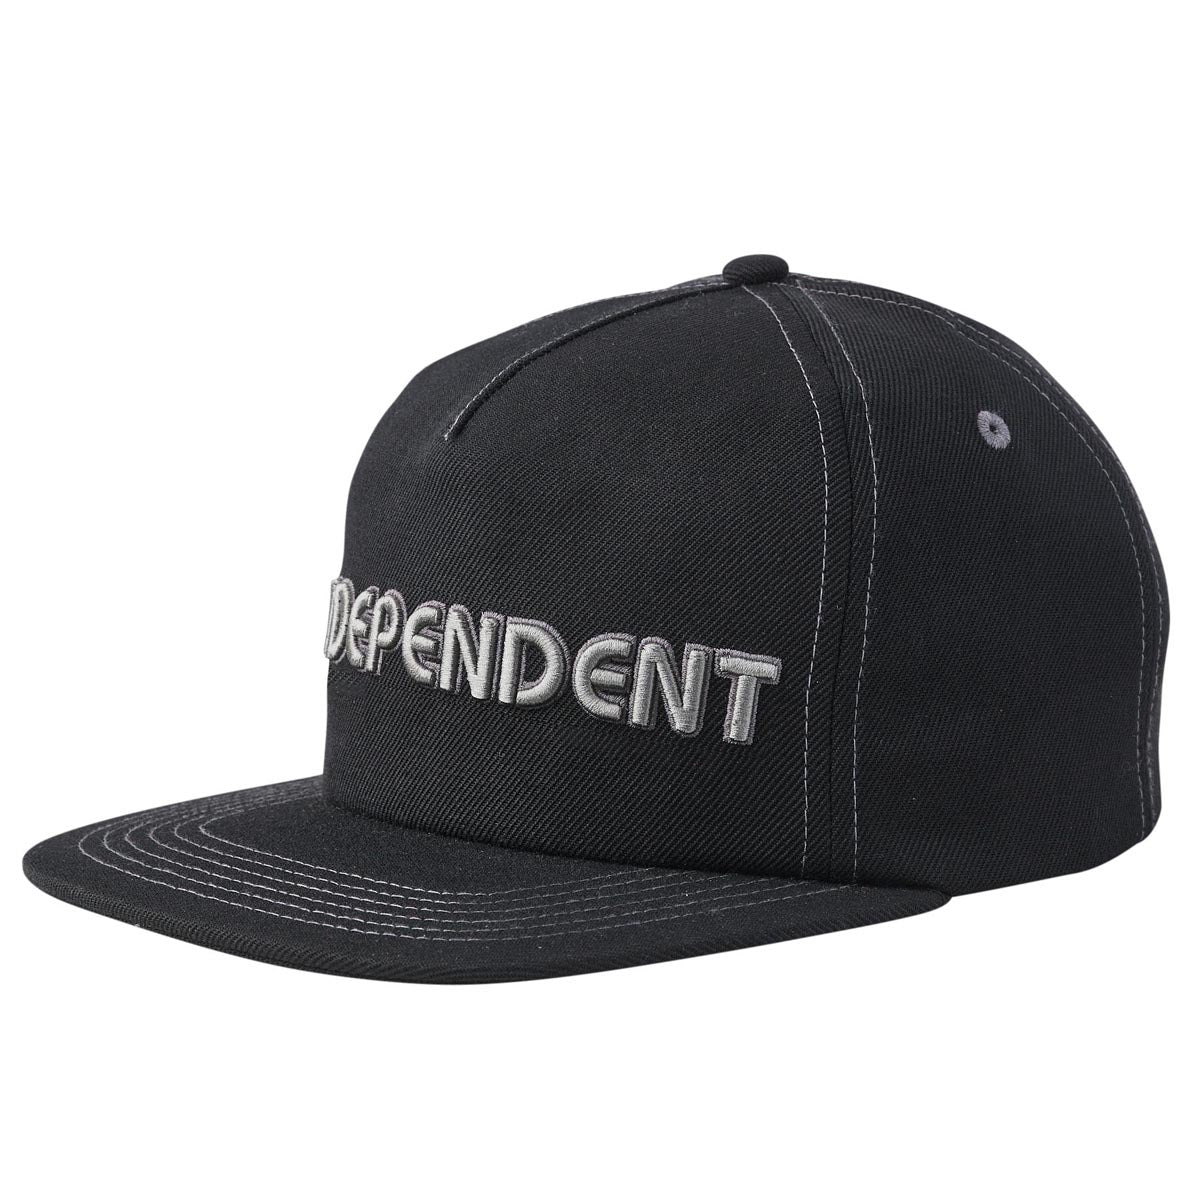 Independent Groundwork Snapback Unstructured Hat - Black image 1